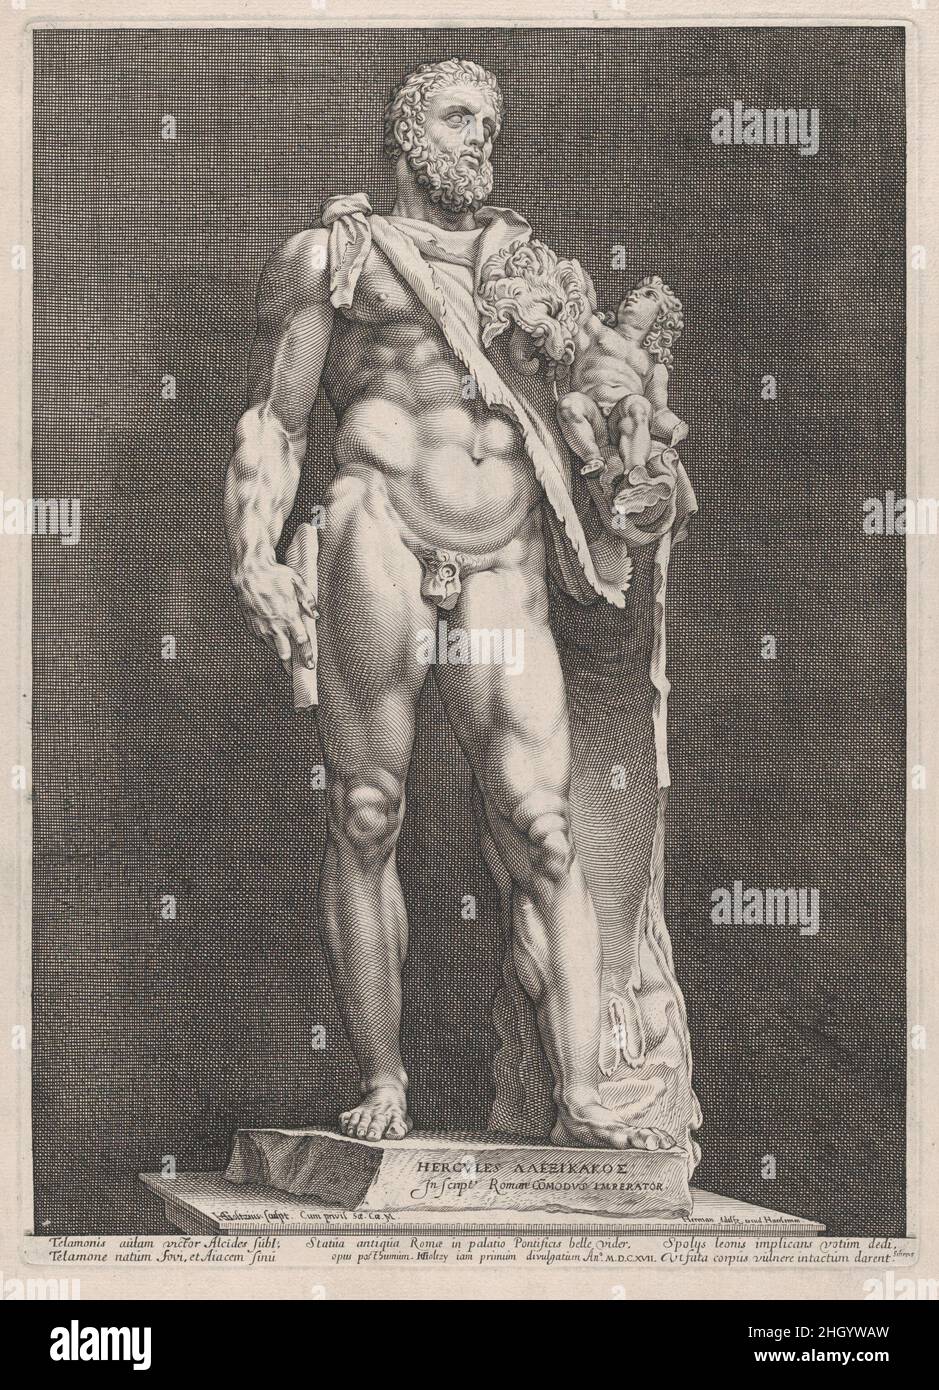 The Emperor Commodus as Hercules 1592 Hendrick Goltzius. The Emperor Commodus as Hercules. Hendrick Goltzius (Netherlandish, Mühlbracht 1558–1617 Haarlem). 1592. Engraving. Prints Stock Photo